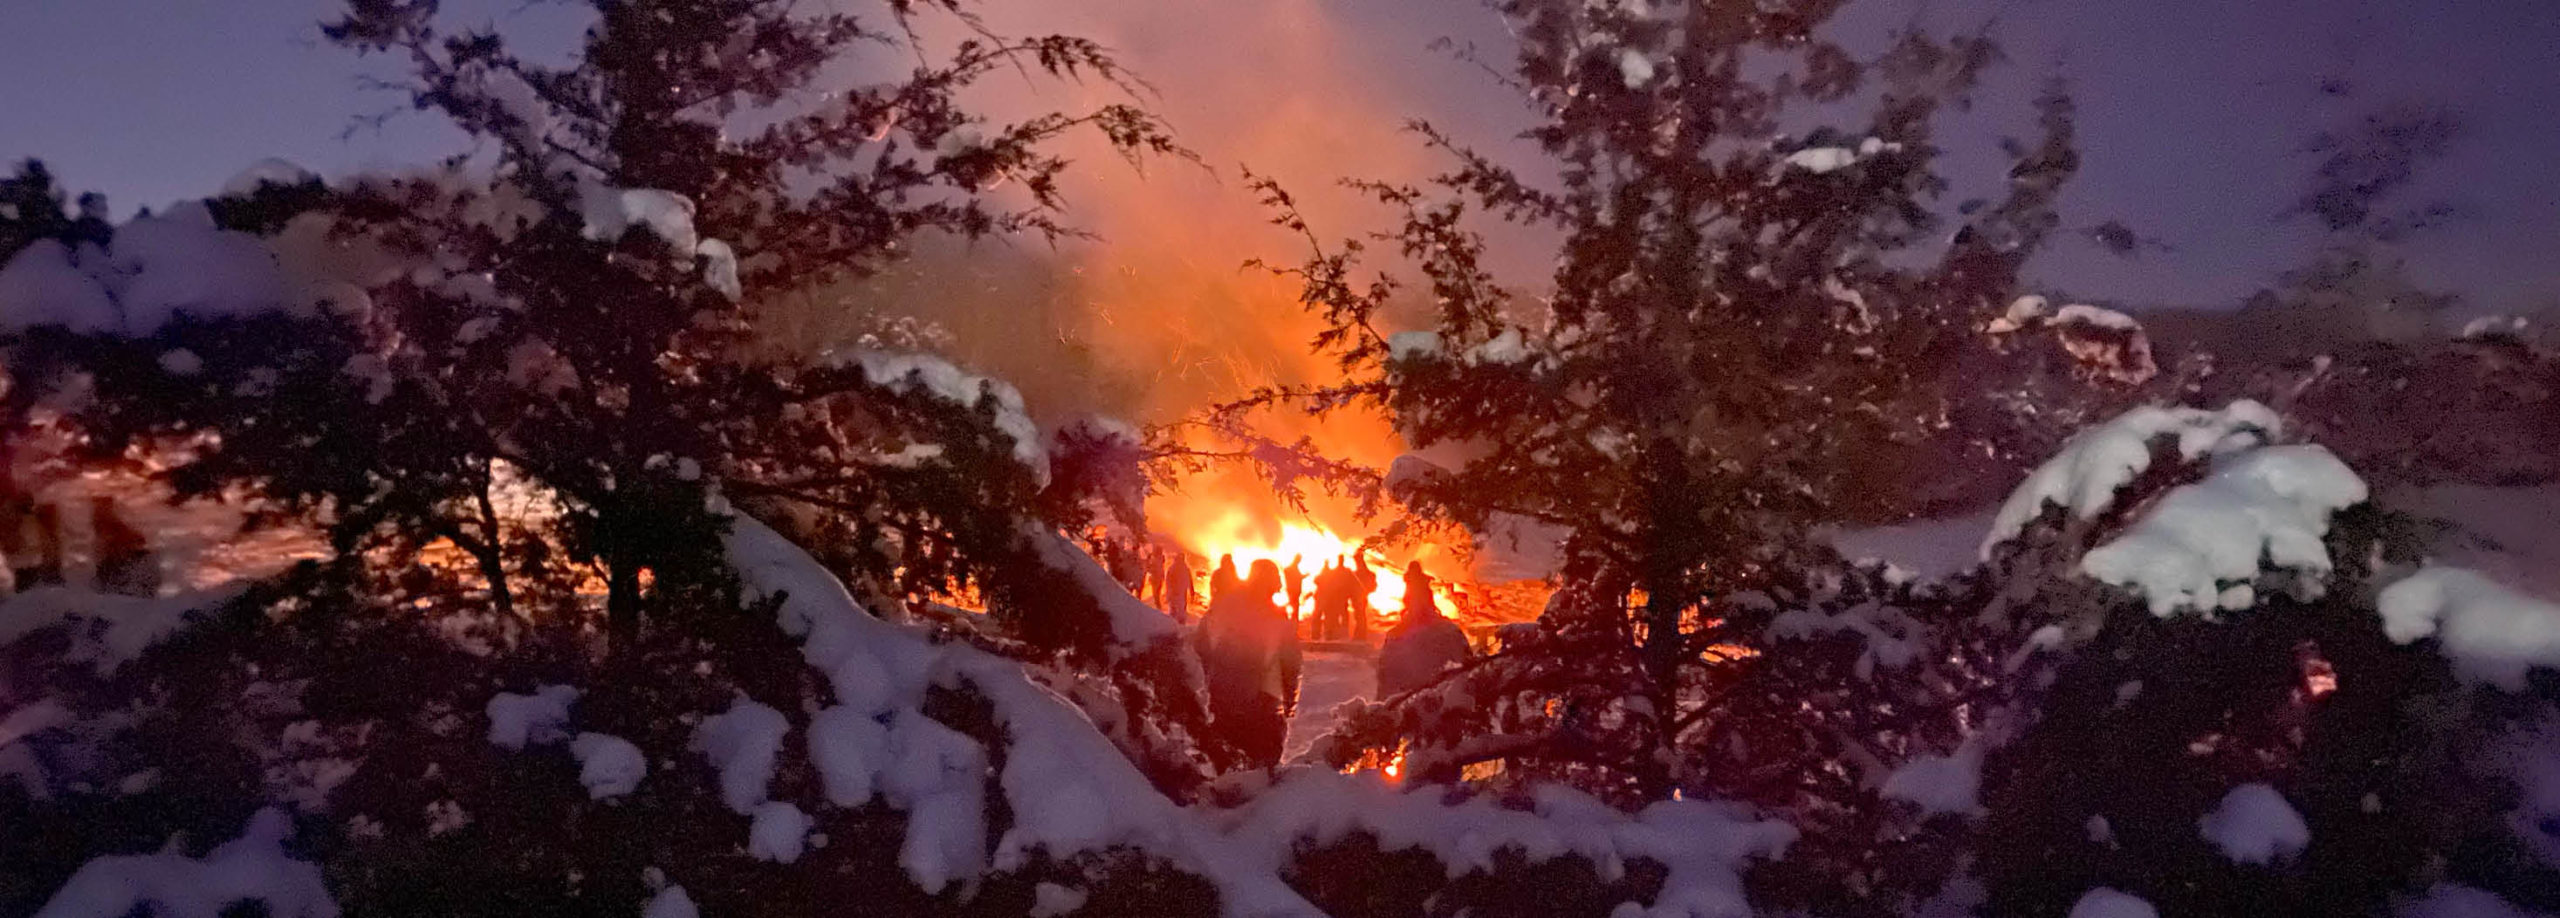 Bonfire seen through snow covered trees